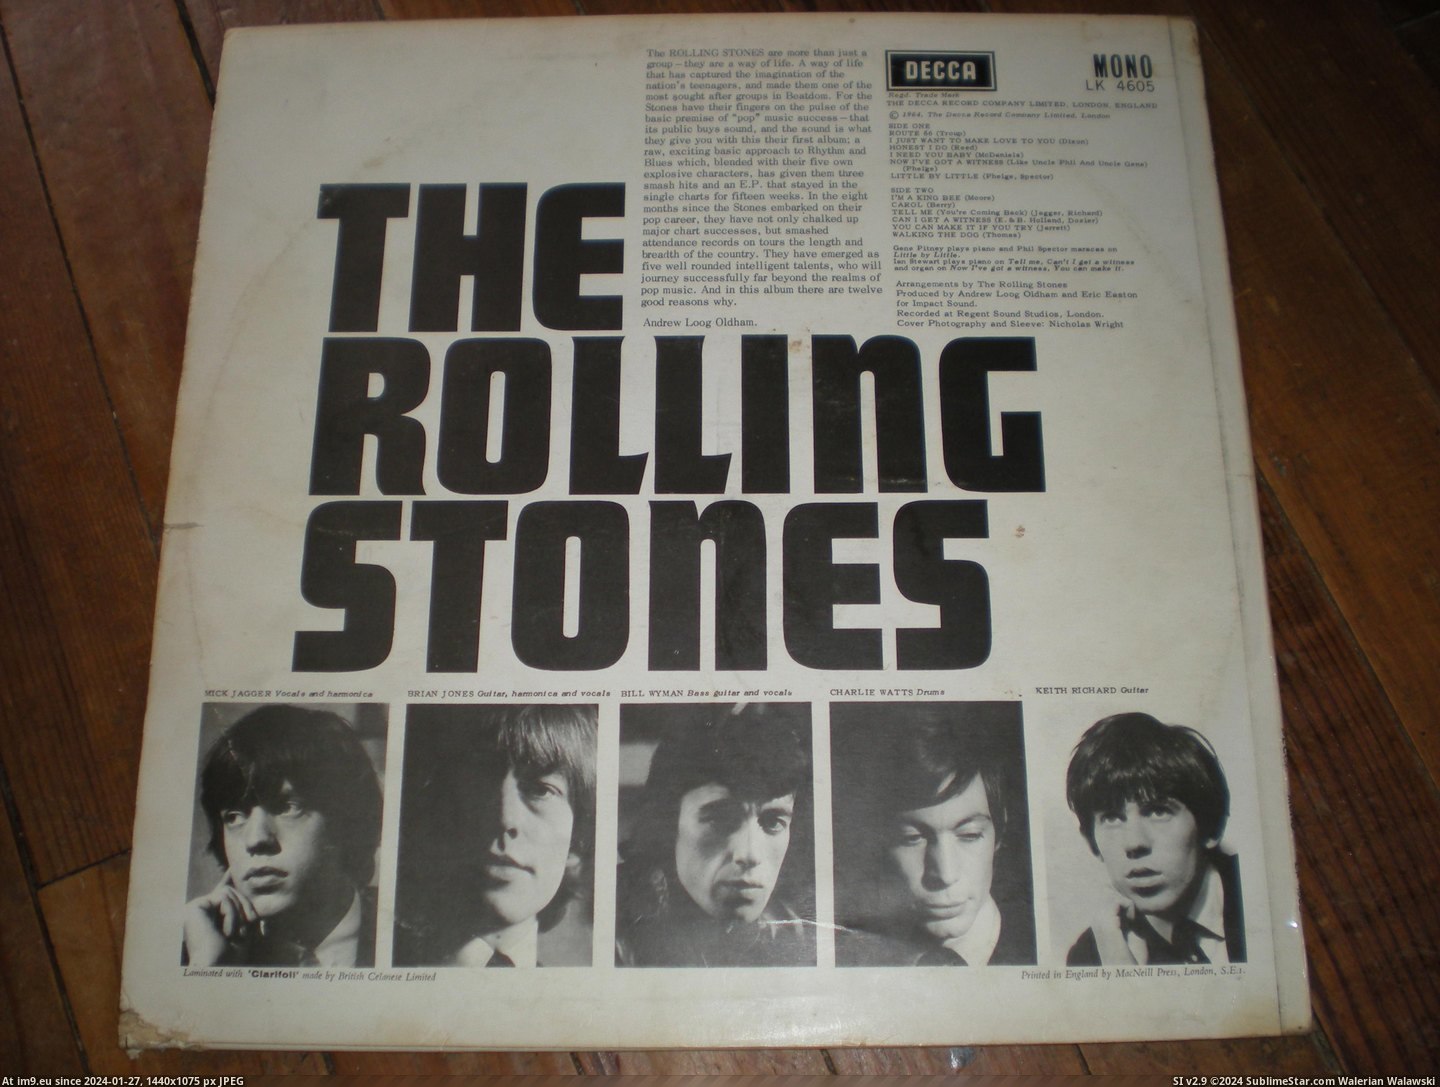 #1st #Boxed #Stones Stones 1st BOXED 6 Pic. (Image of album new 1))